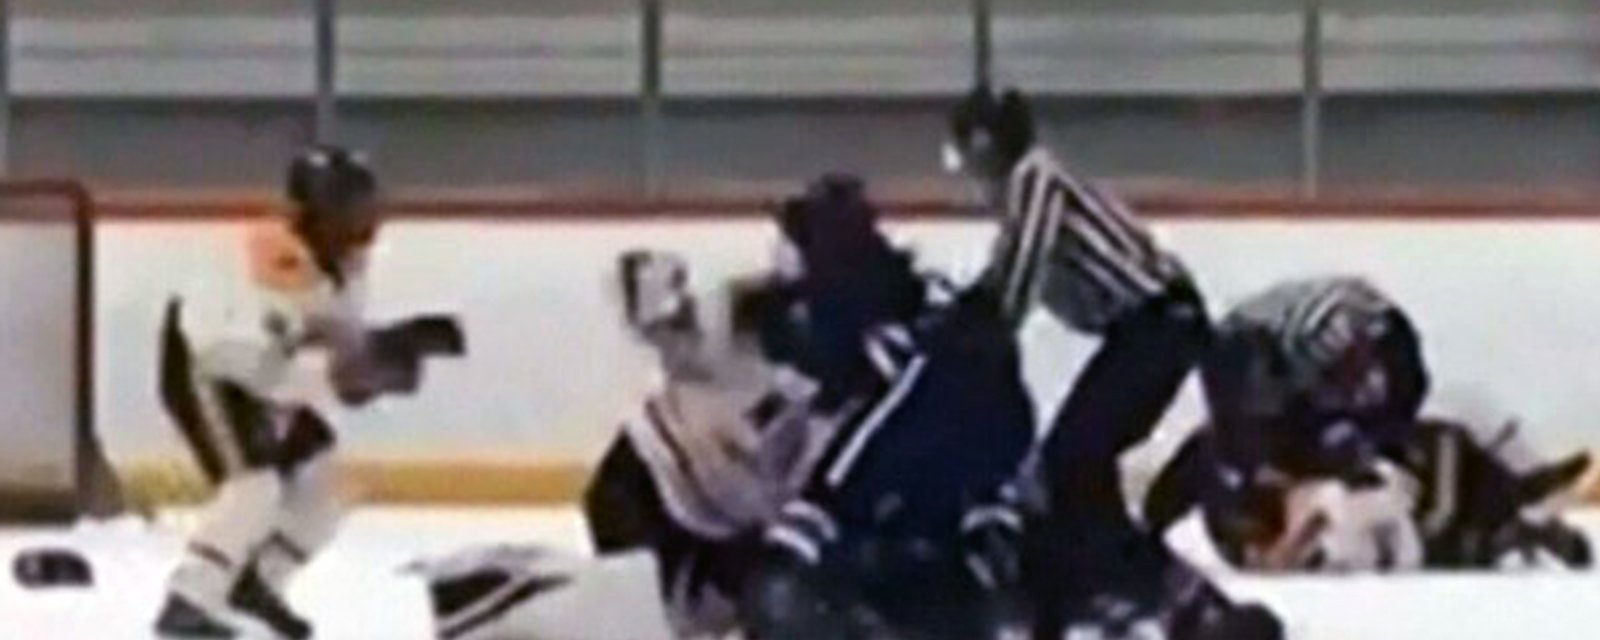 Video of brutal brawl between children at minor hockey tournament in BC